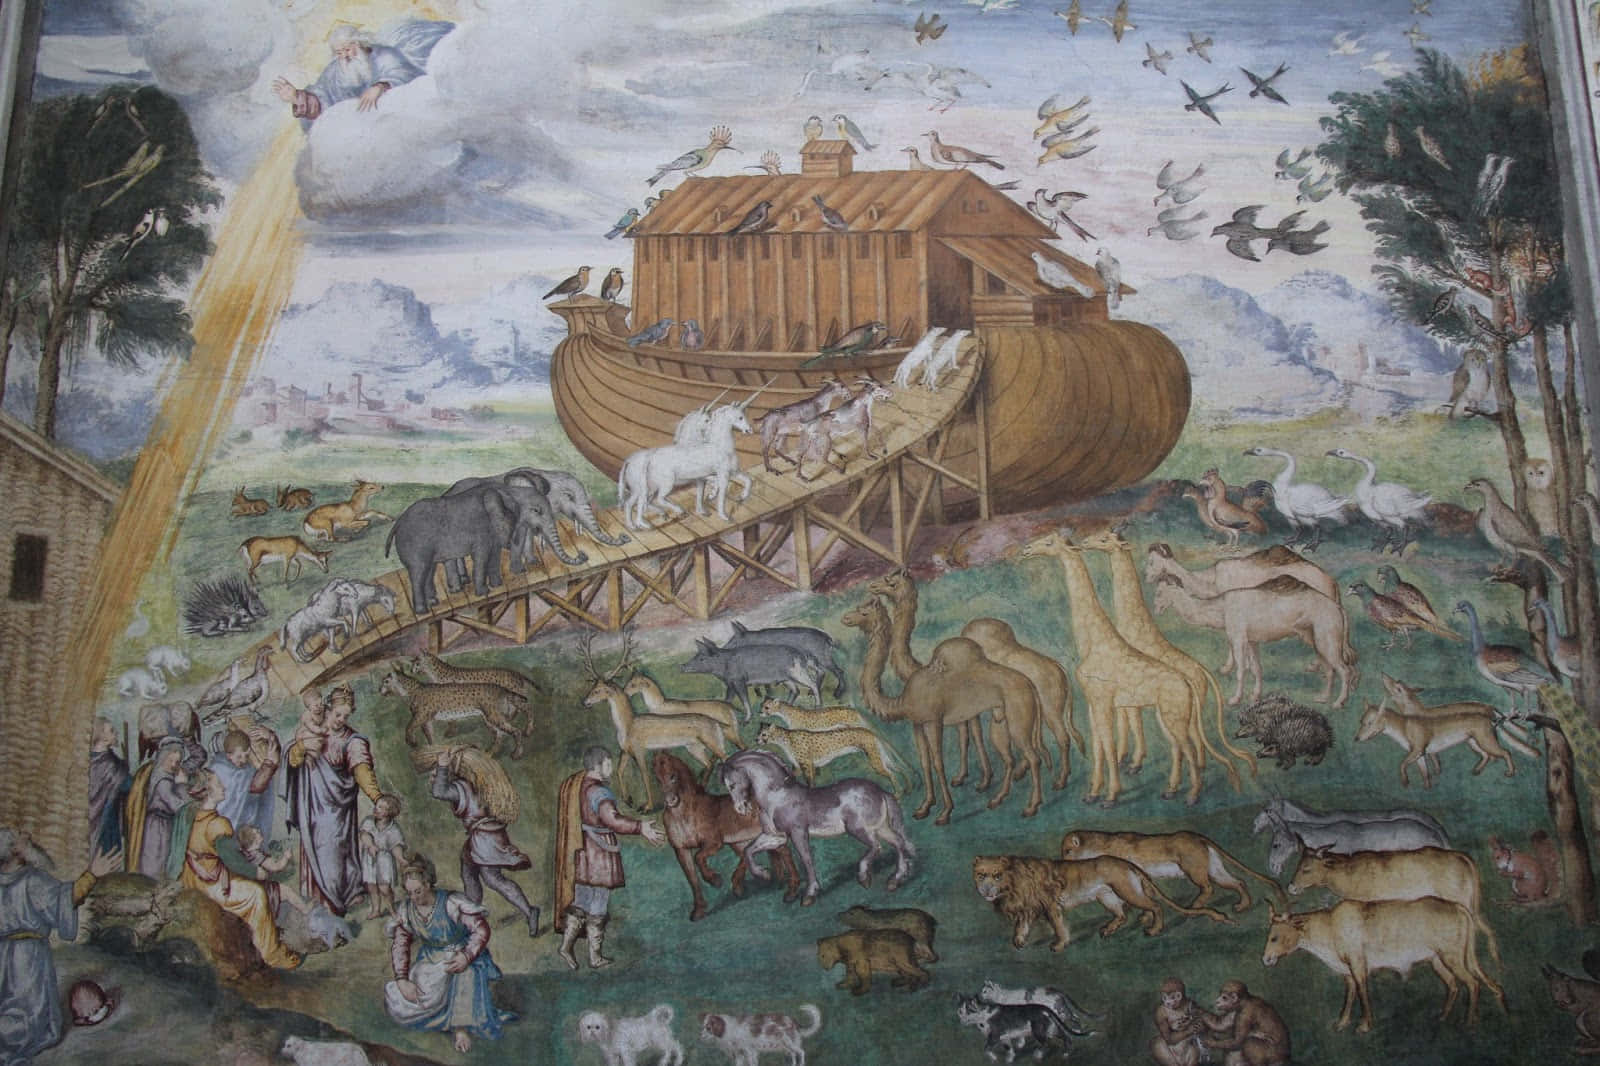 Noah's Ark, Symbol of Hope&Faith